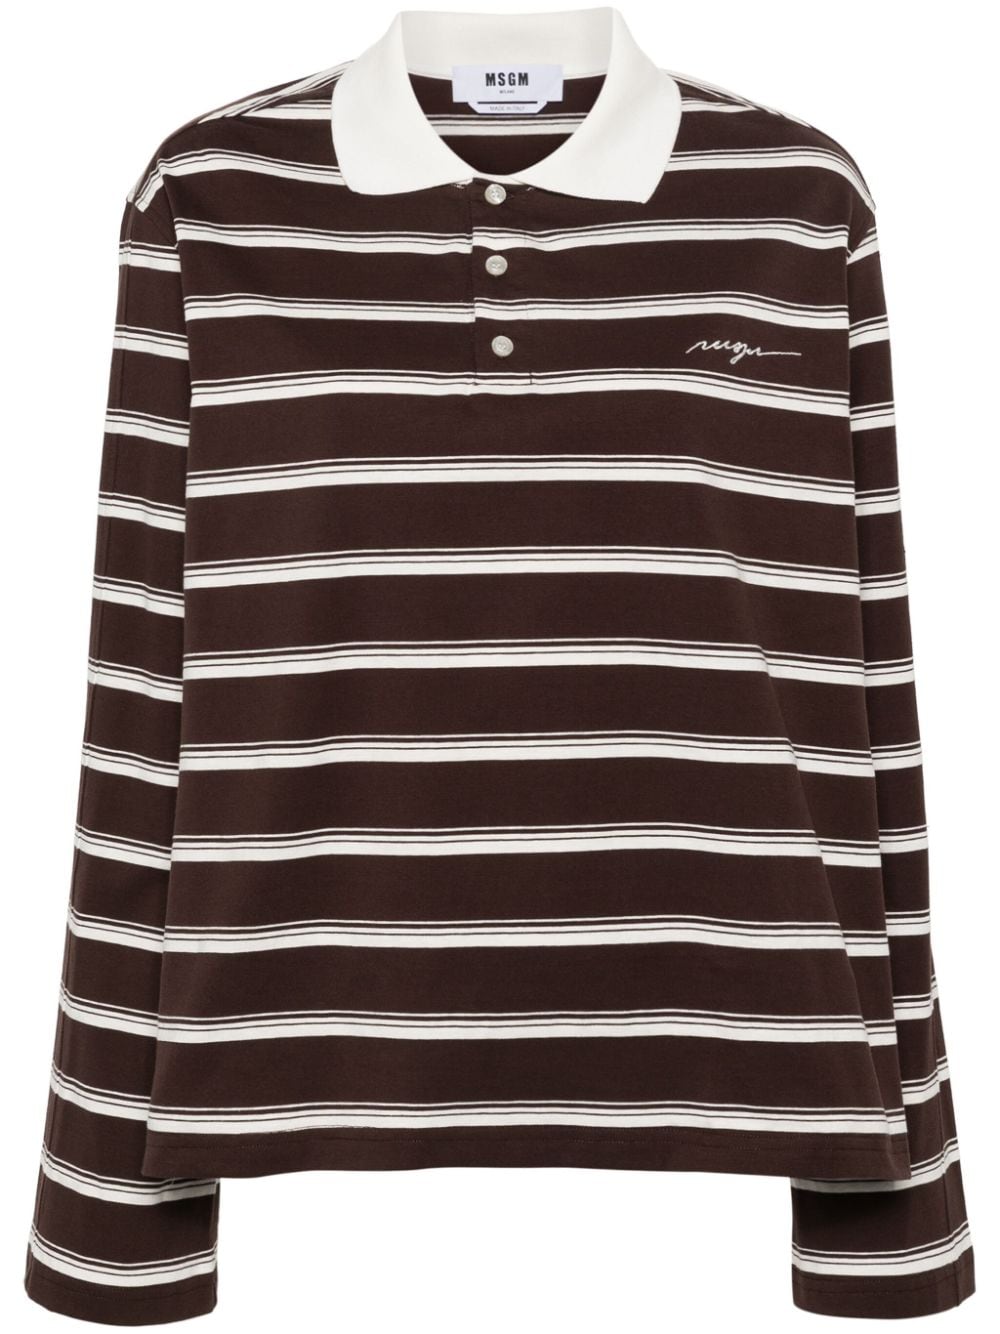 Image 1 of MSGM striped cotton polo top